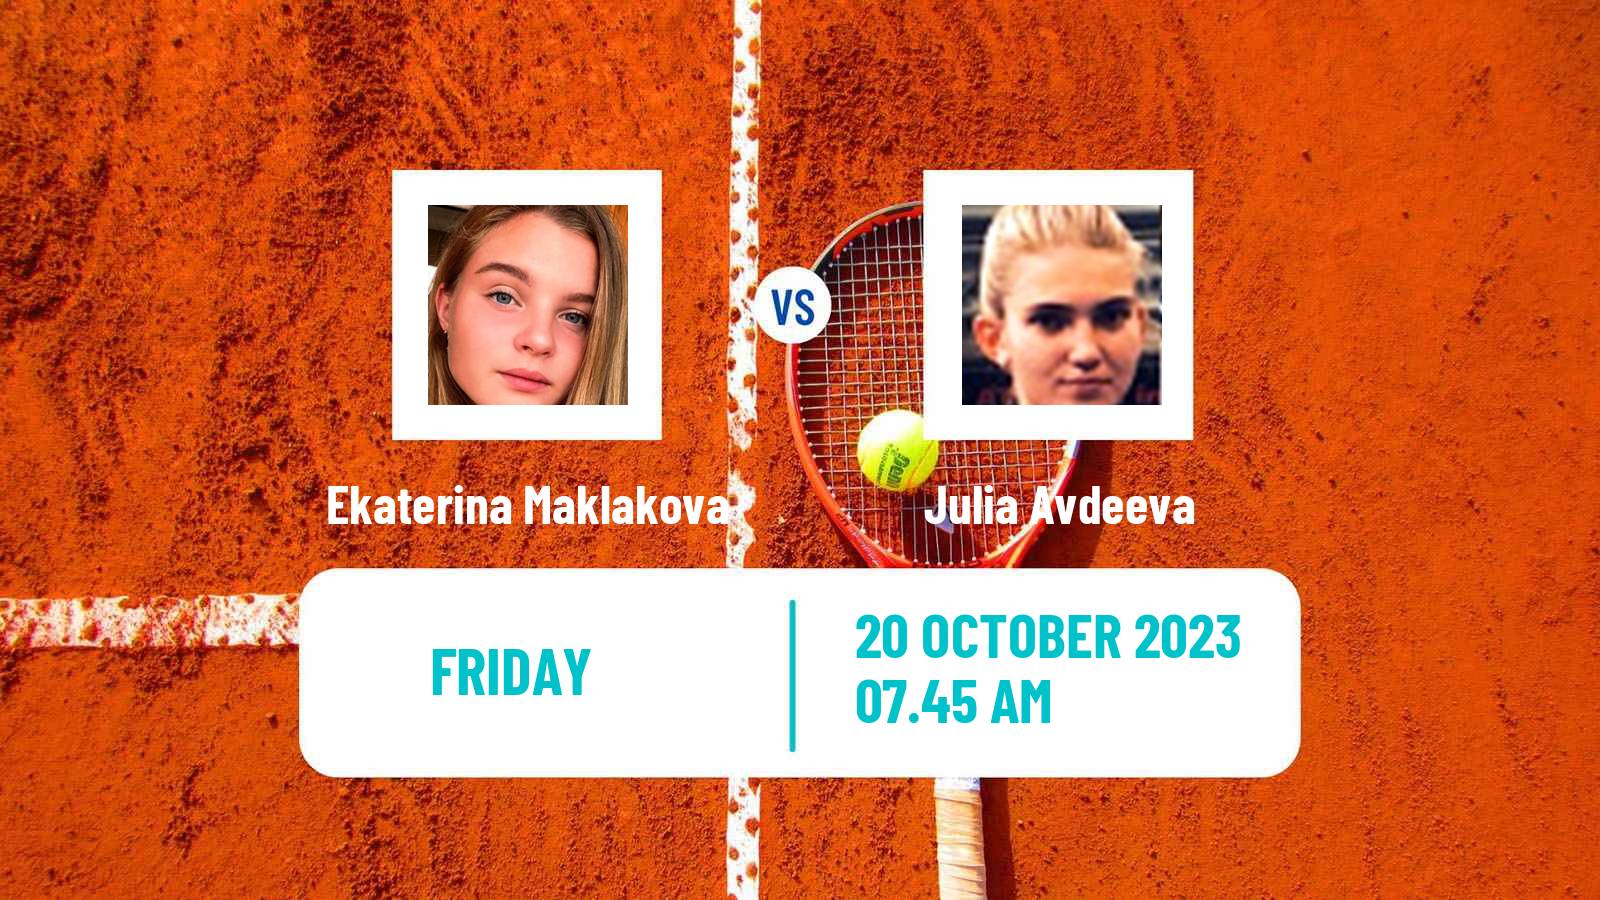 Tennis ITF W60 Hamburg Women Ekaterina Maklakova - Julia Avdeeva